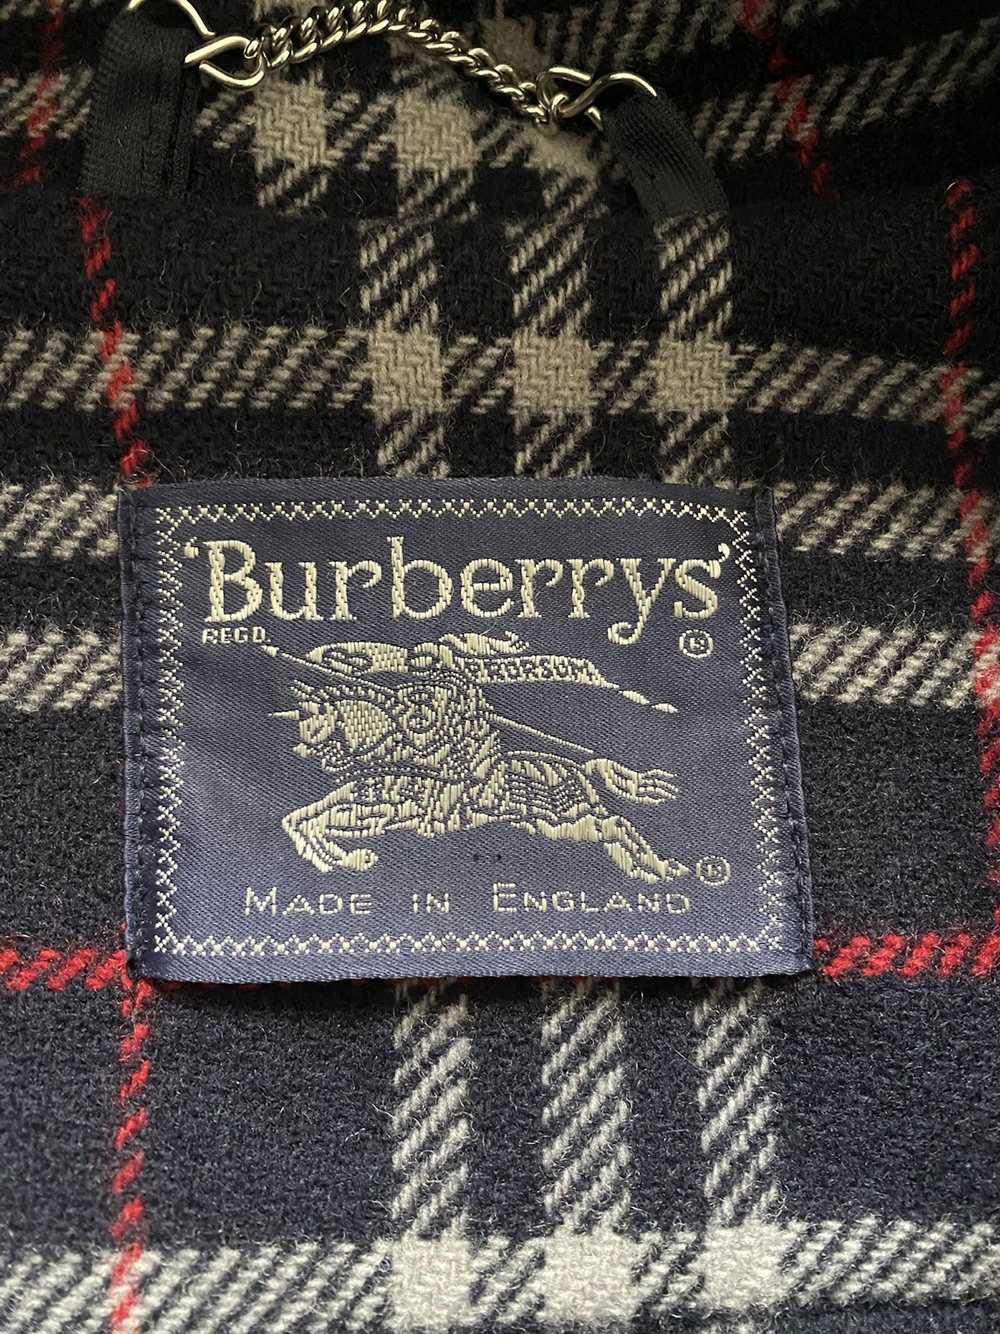 Burberry Vintage Burberrys wool duffel coat - image 4